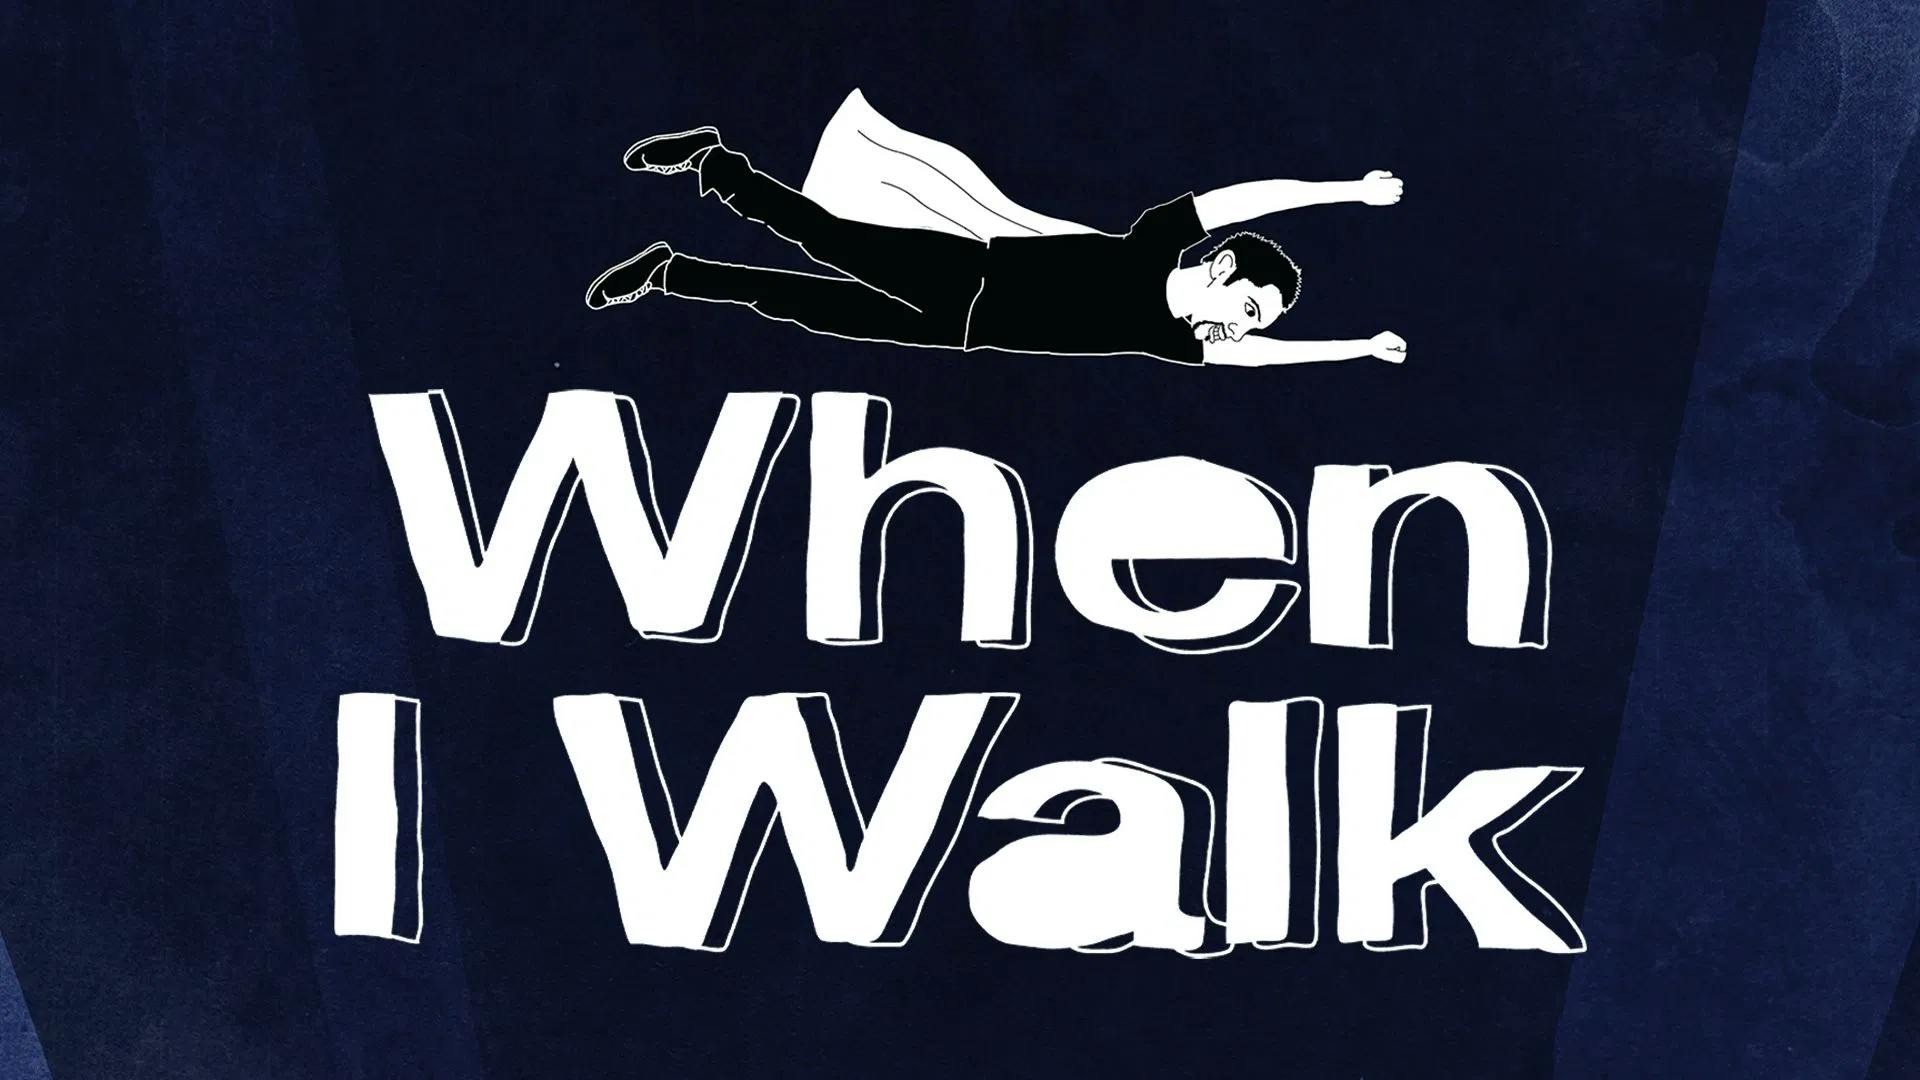 When I Walk